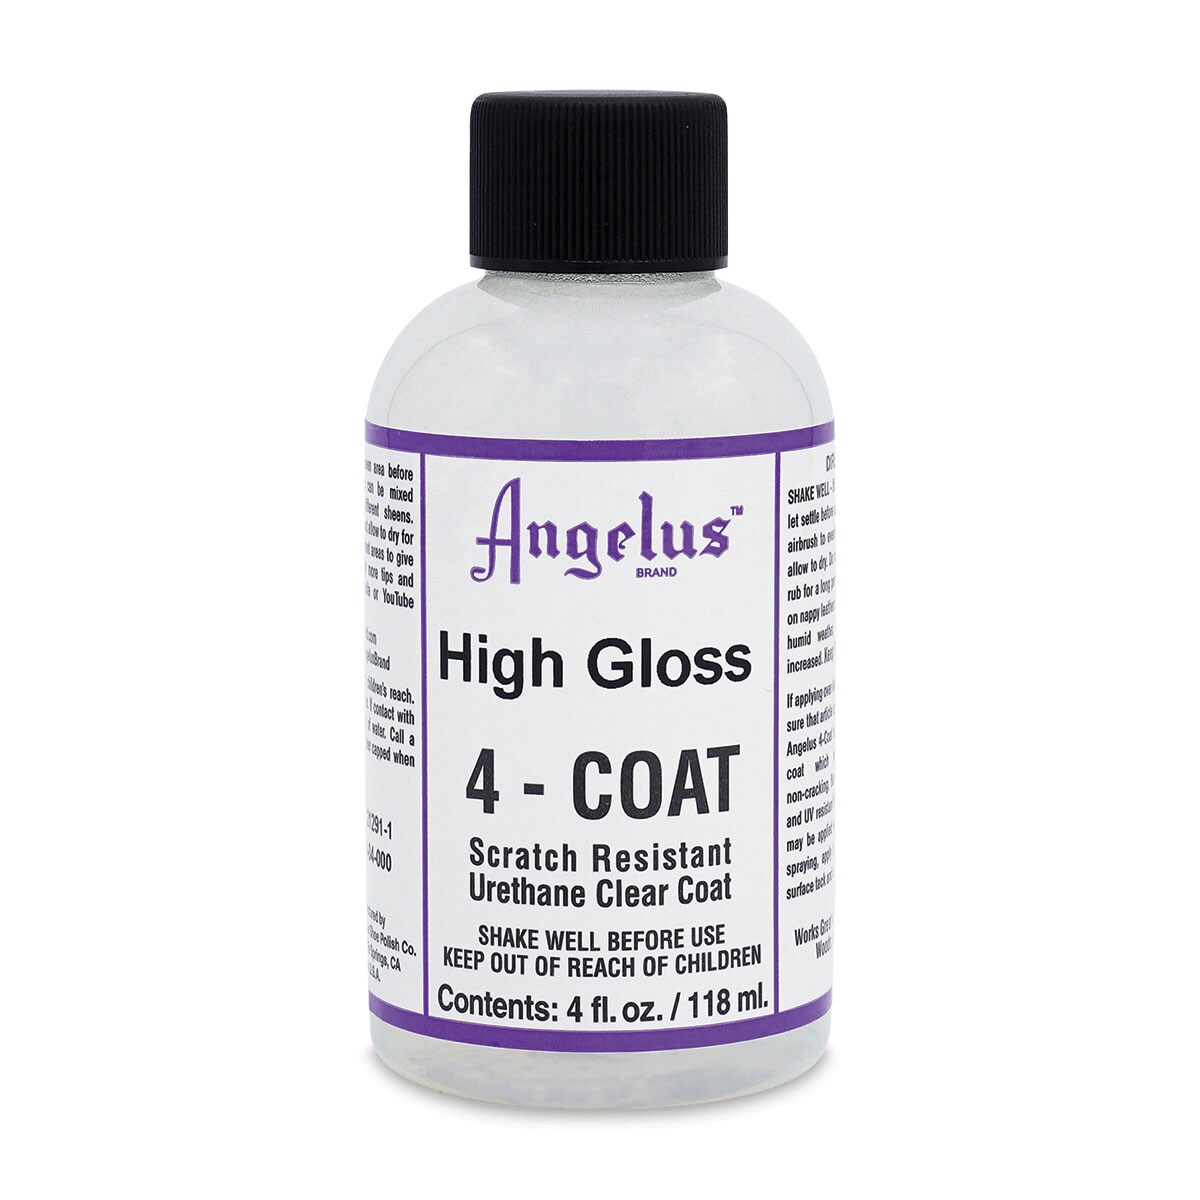 Angelus 4-Coat Urethane Clear Coat - High Gloss, 4 oz, Bottle